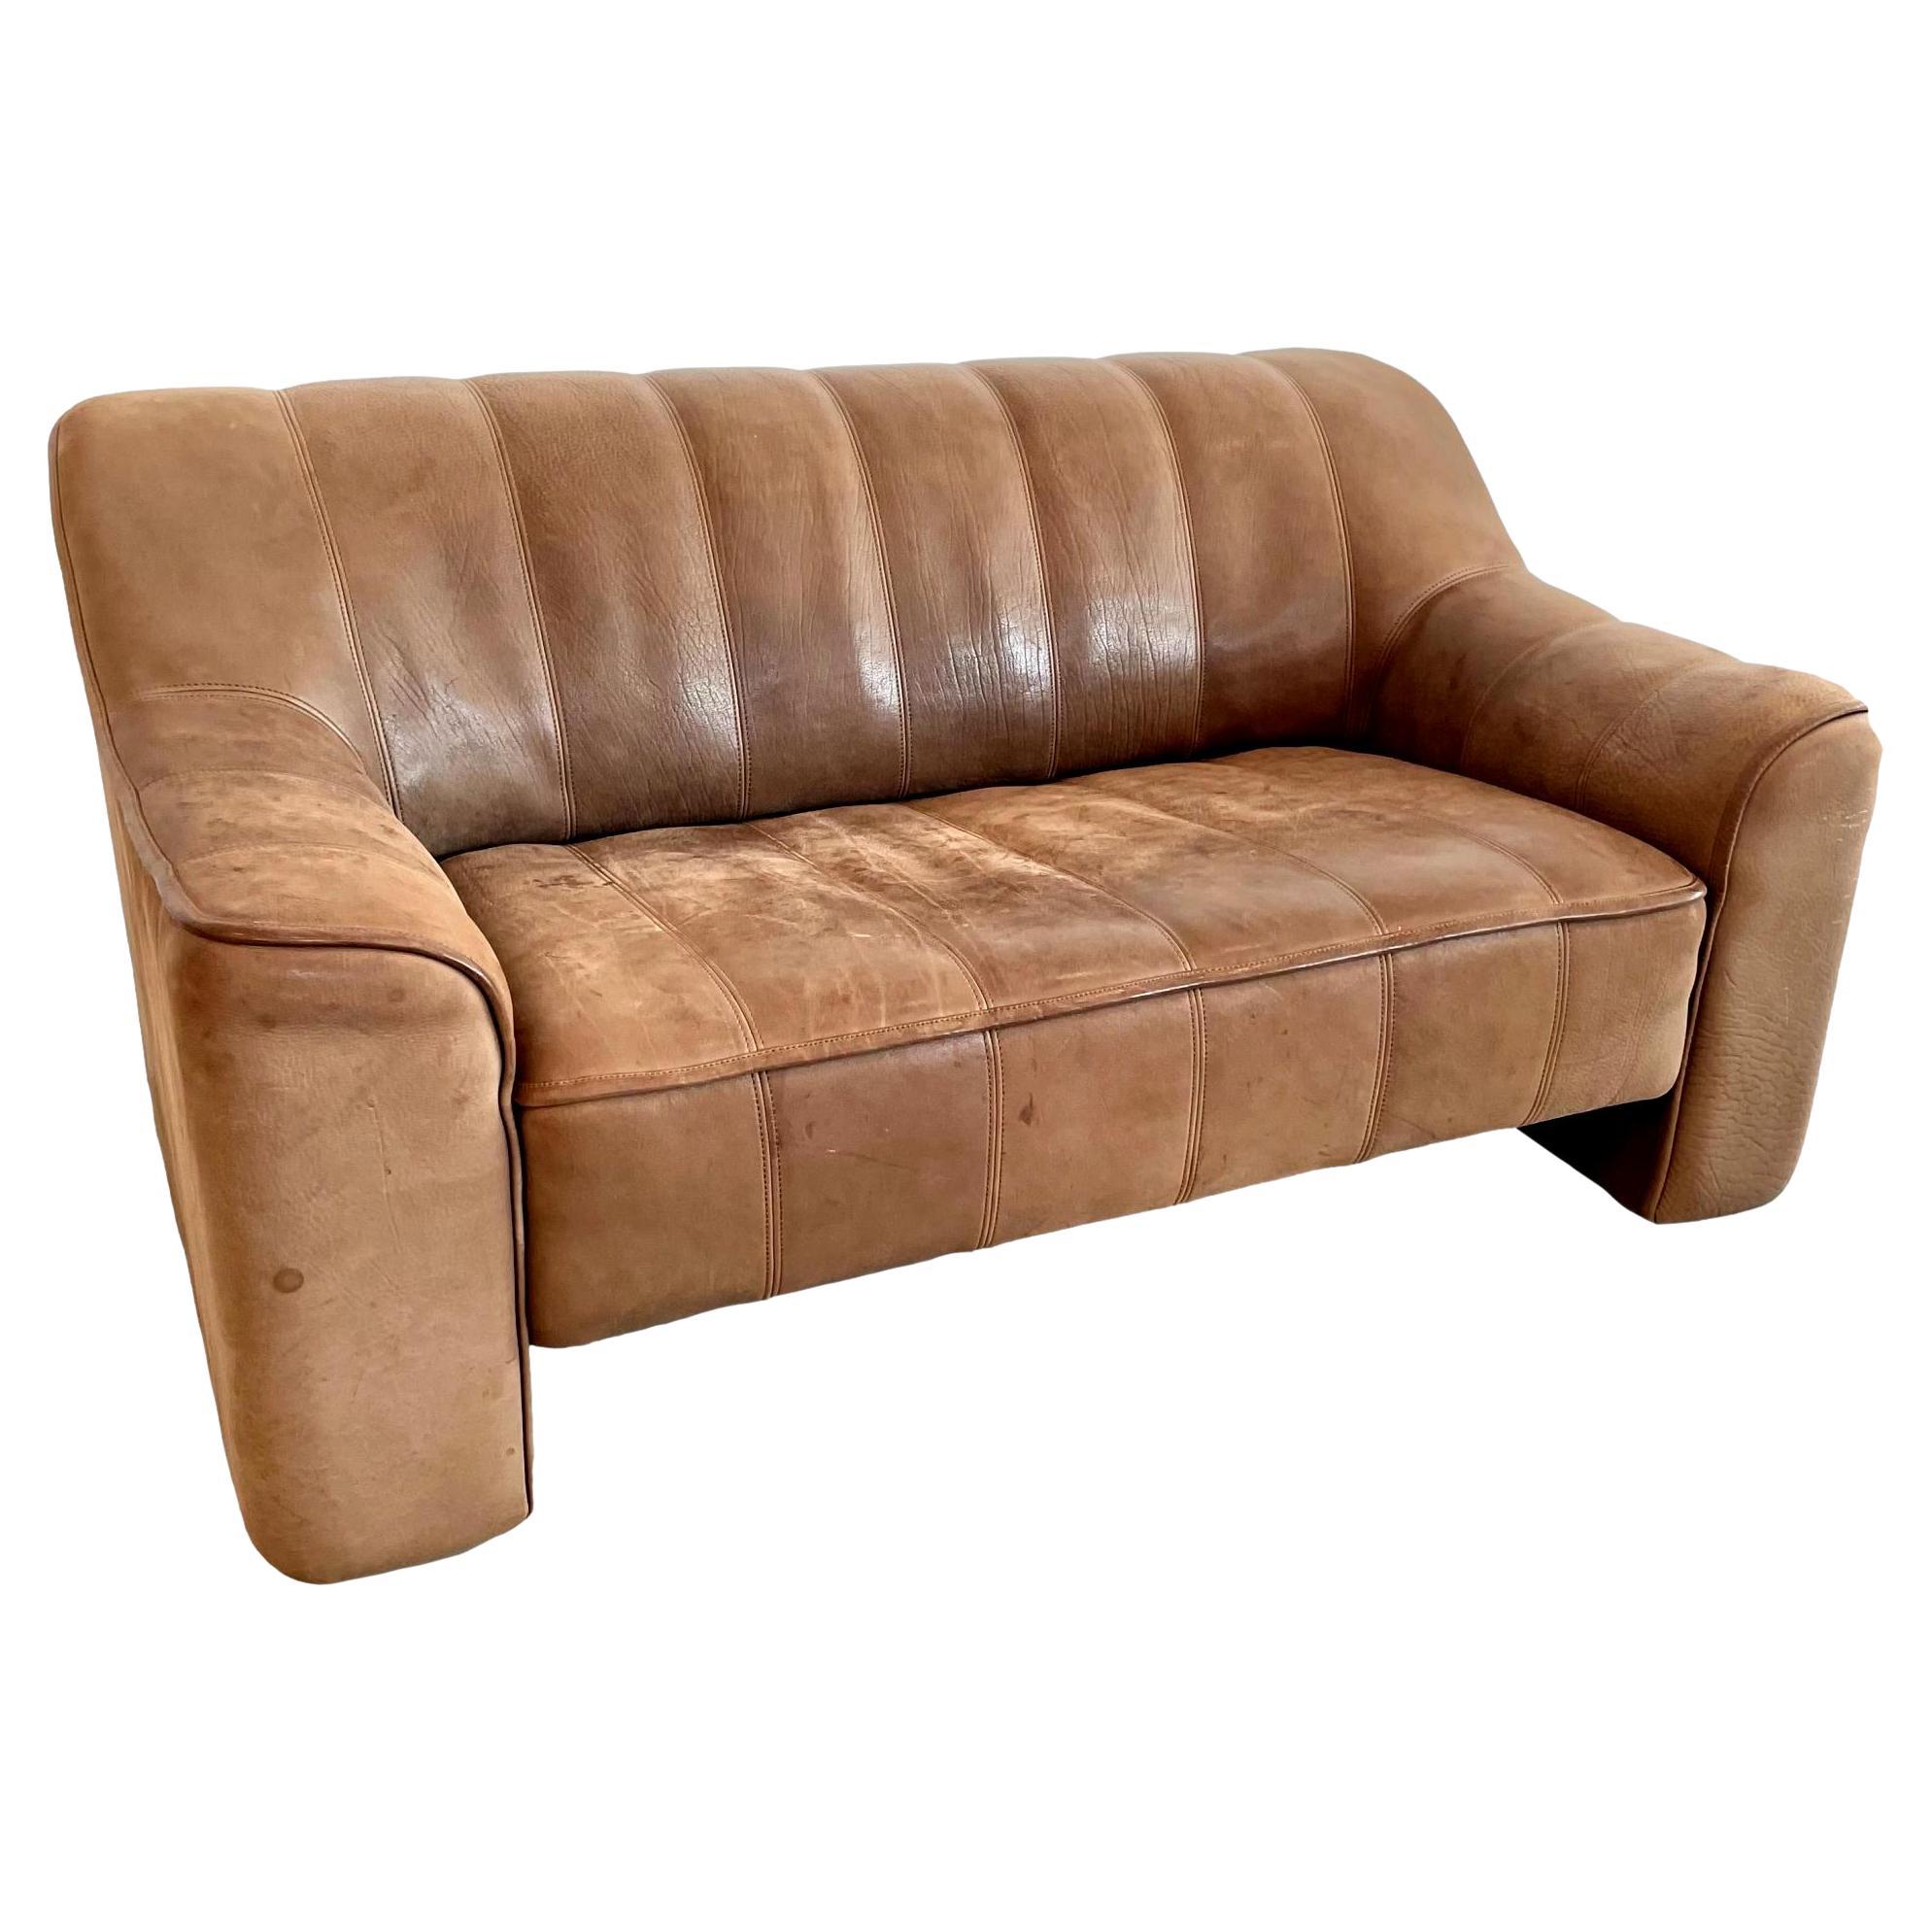 De Sede DS 44 Sofa in Buffalo Leather, 1980s Switzerland